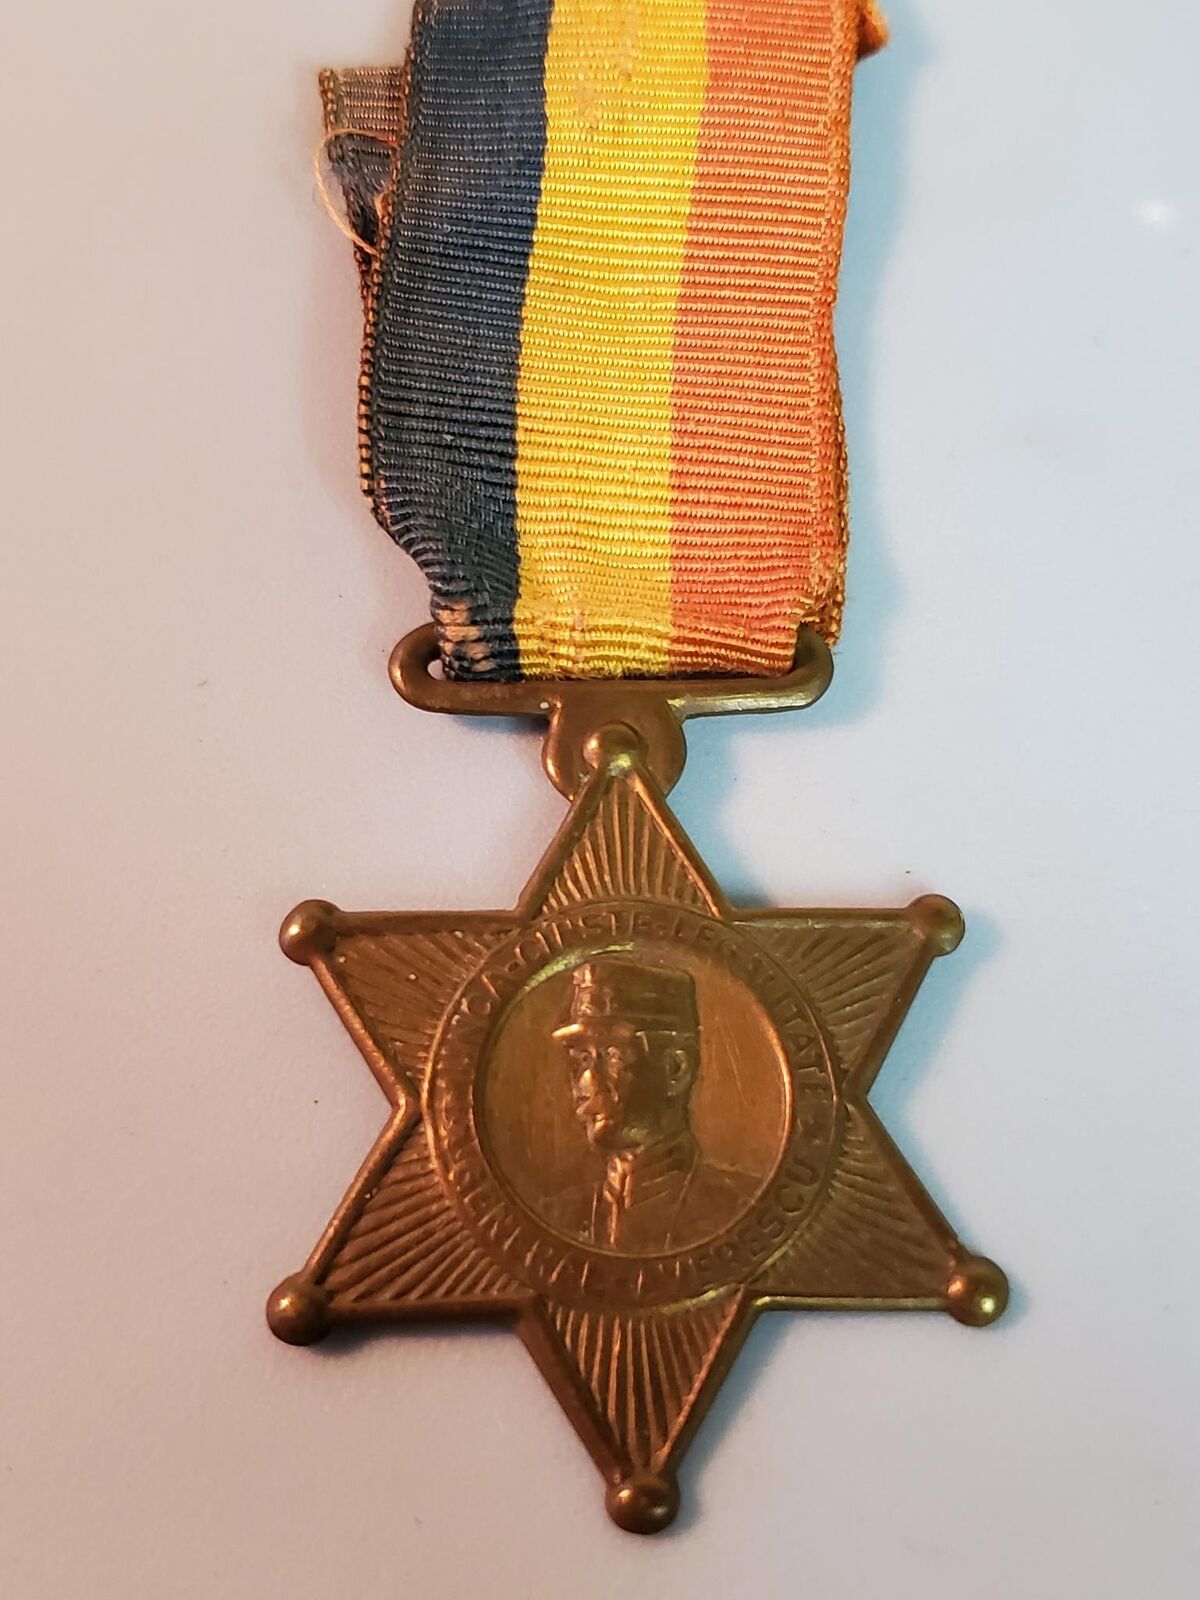 General Averescu logo of star peoples league in interwar Romania medal w/ribbon